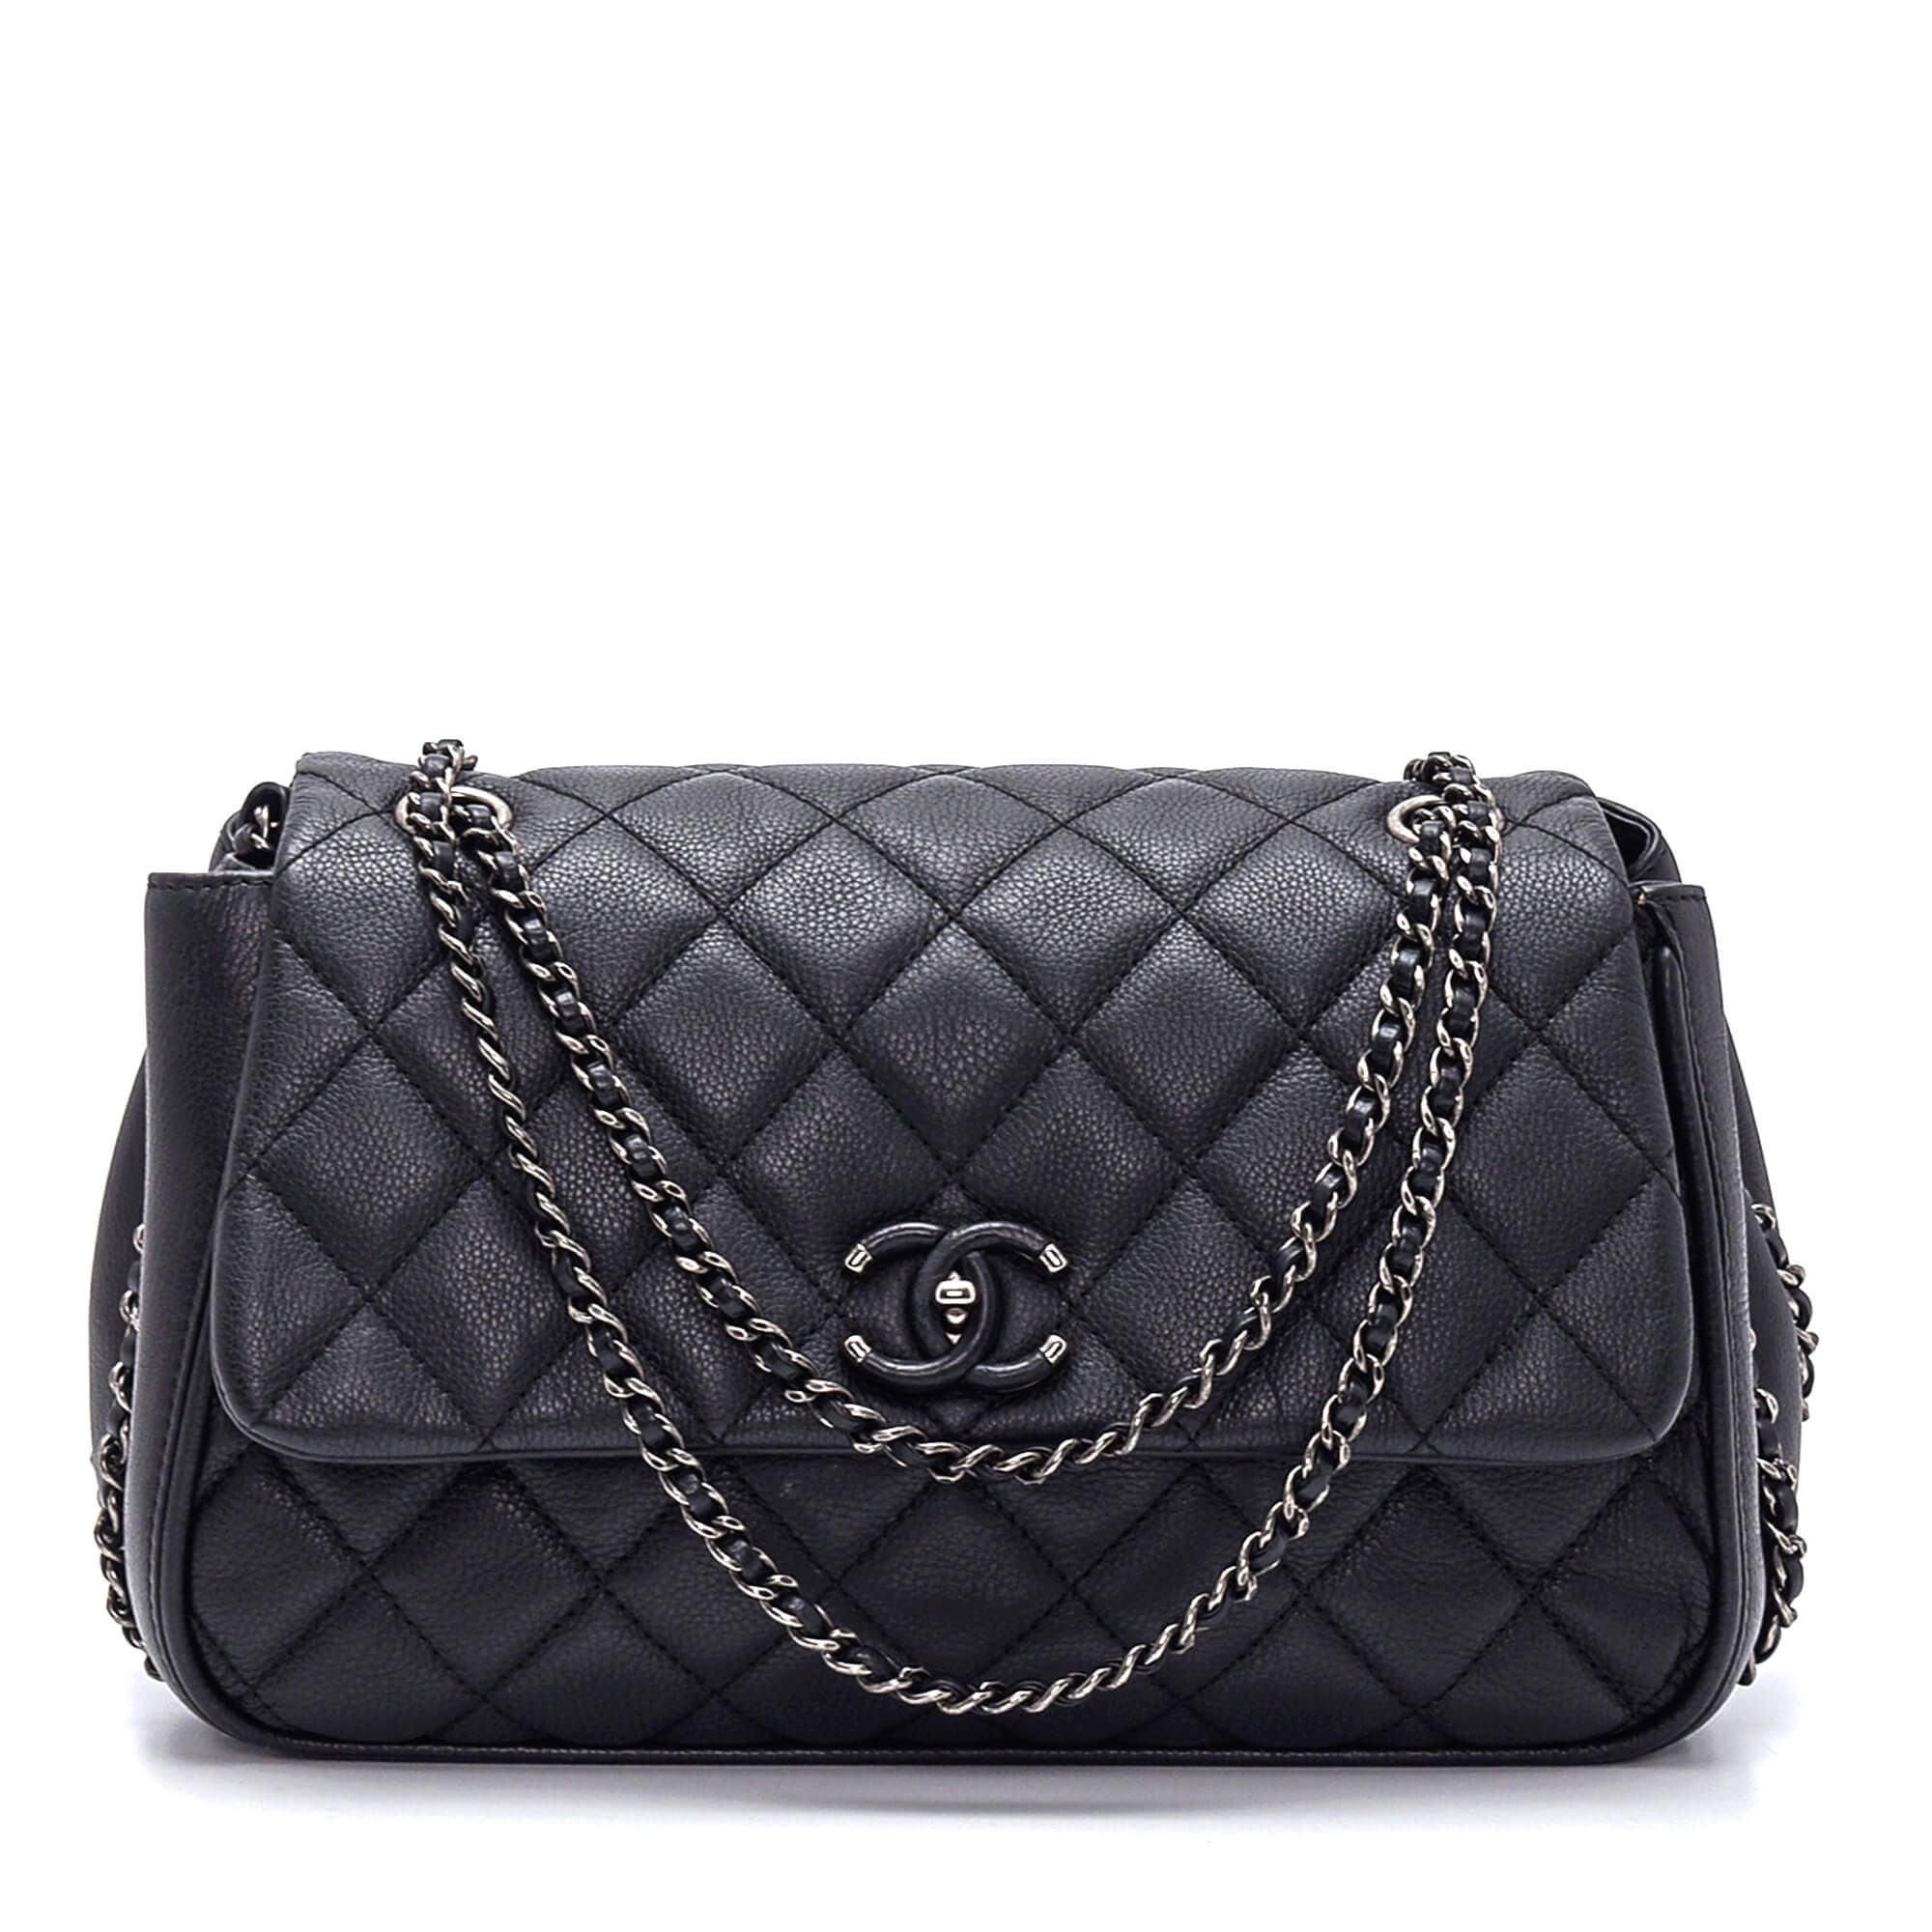  Chanel - Black Caviar Leather Chain Round Shoulder Bag